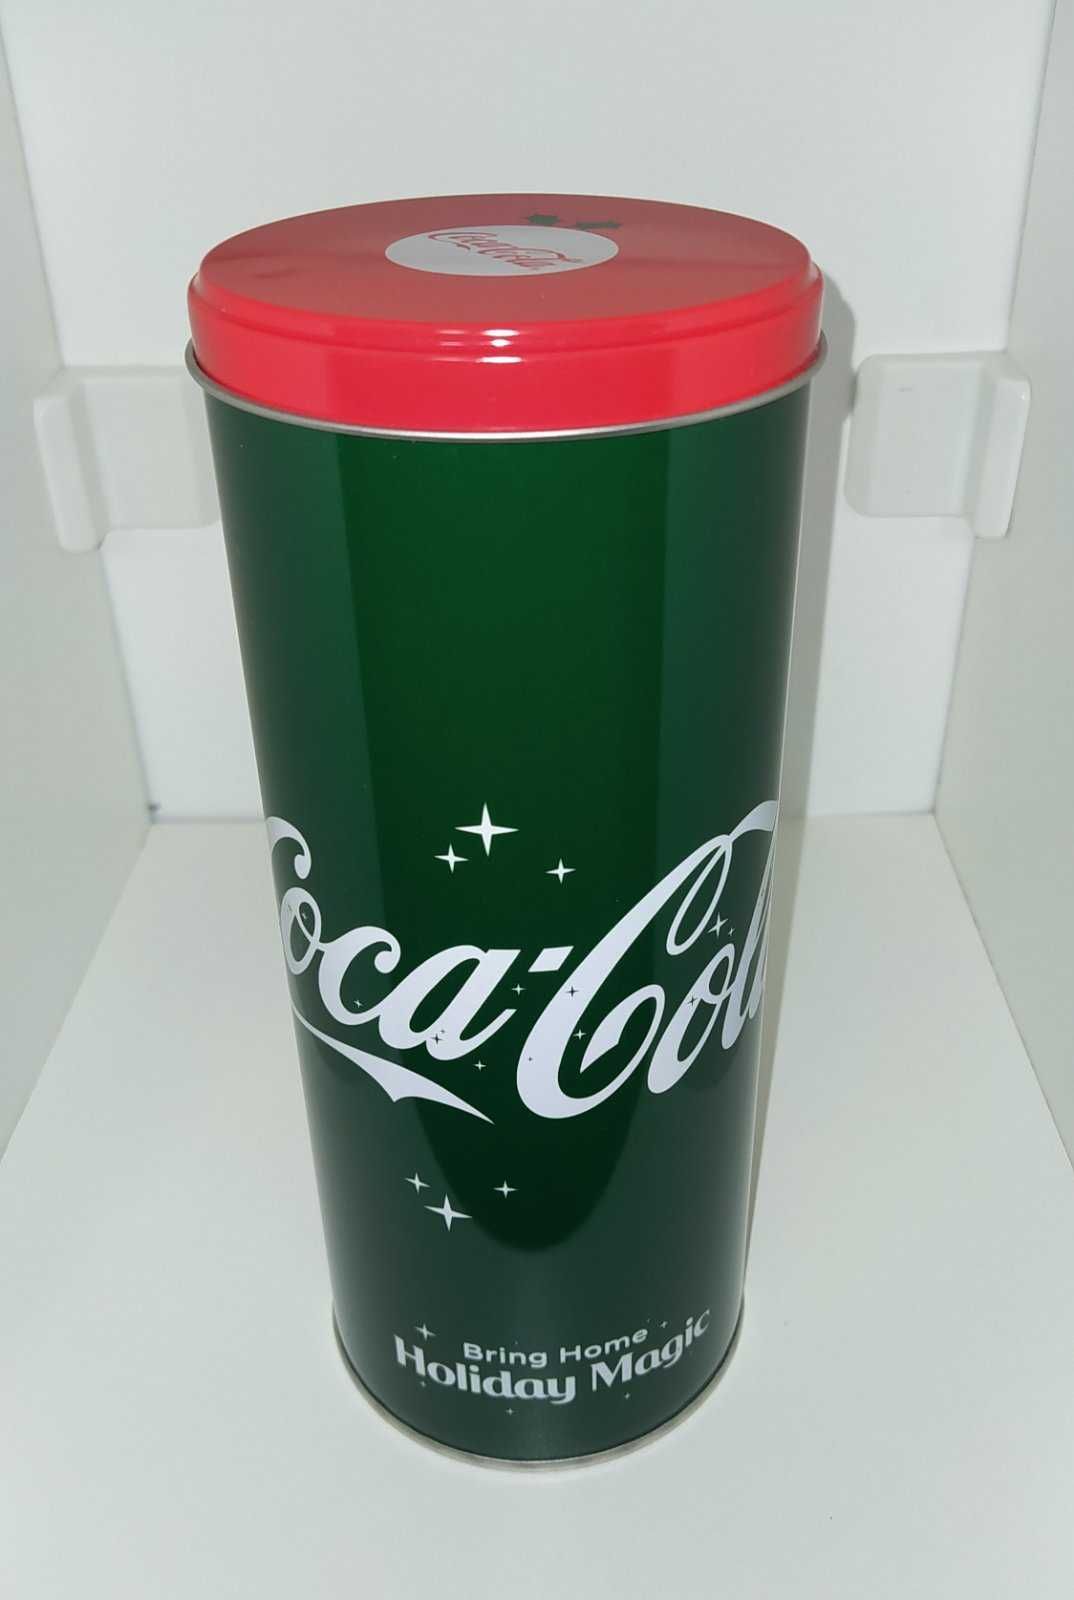 Топ цена COCA COLA Кока кола кутии